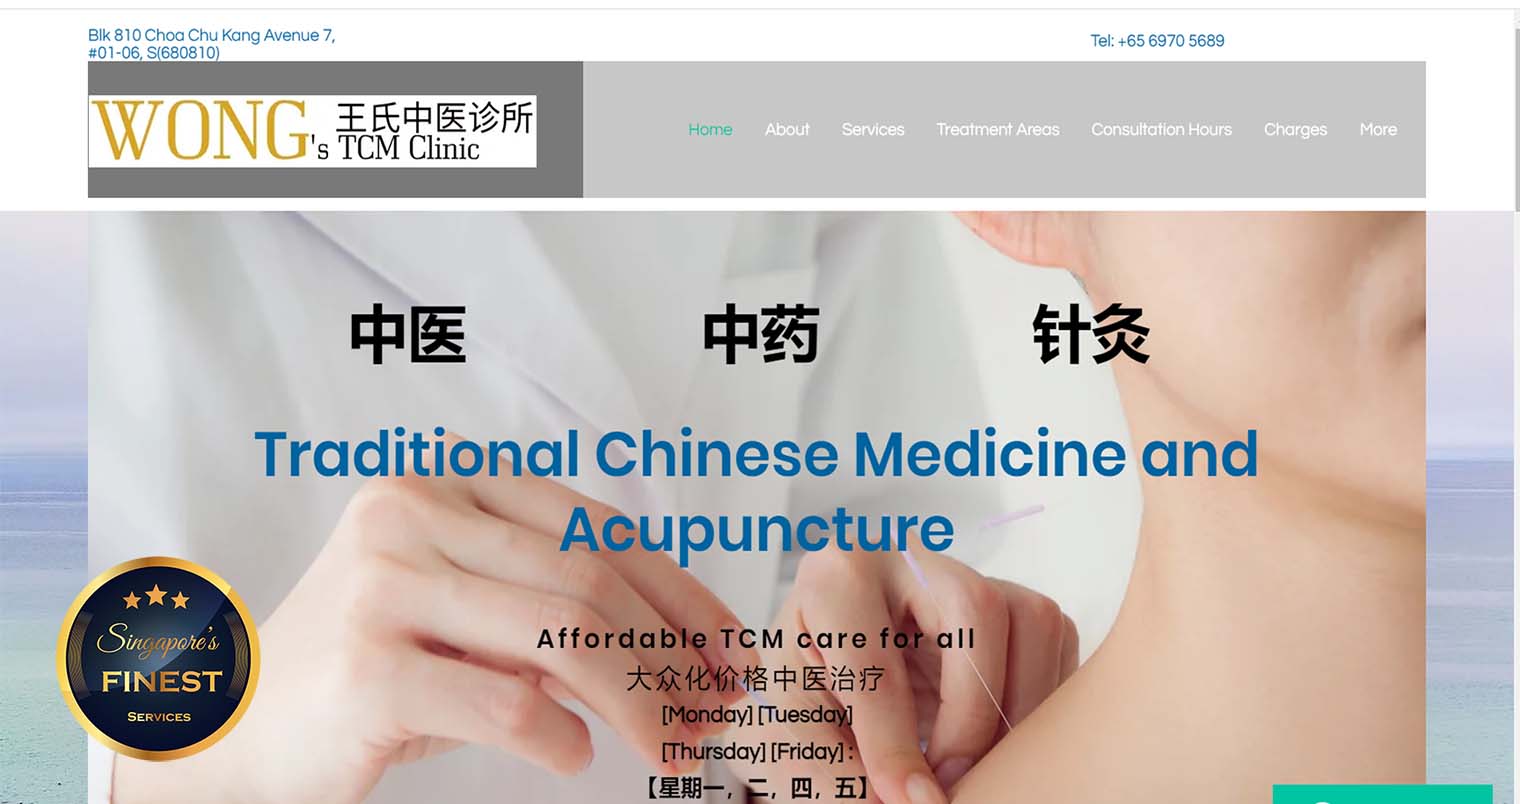 Wong's TCM Clinic - TCM Clinic Singapore